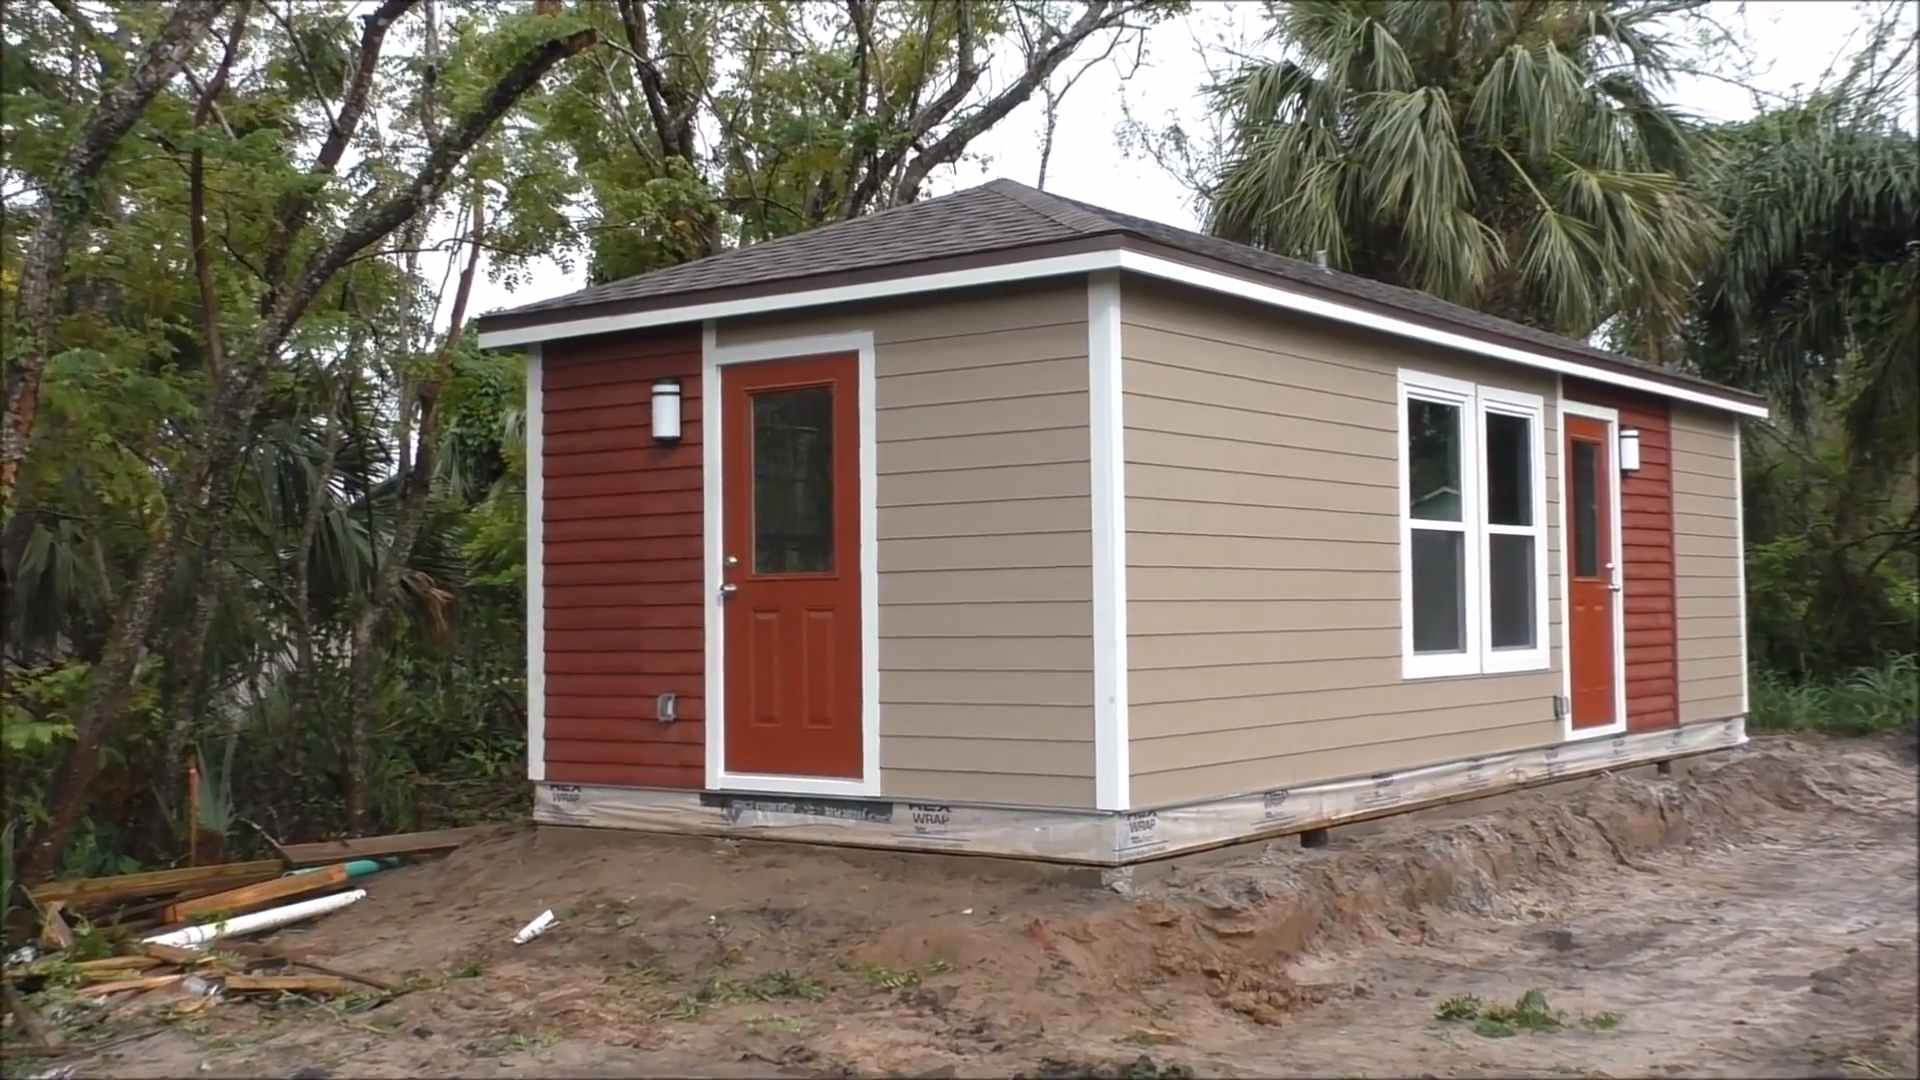 Tiny House Lots Available in Oviedo Florida for Foundation Based Tiny Homes via Cornerstone Tiny Homes YouTube 003